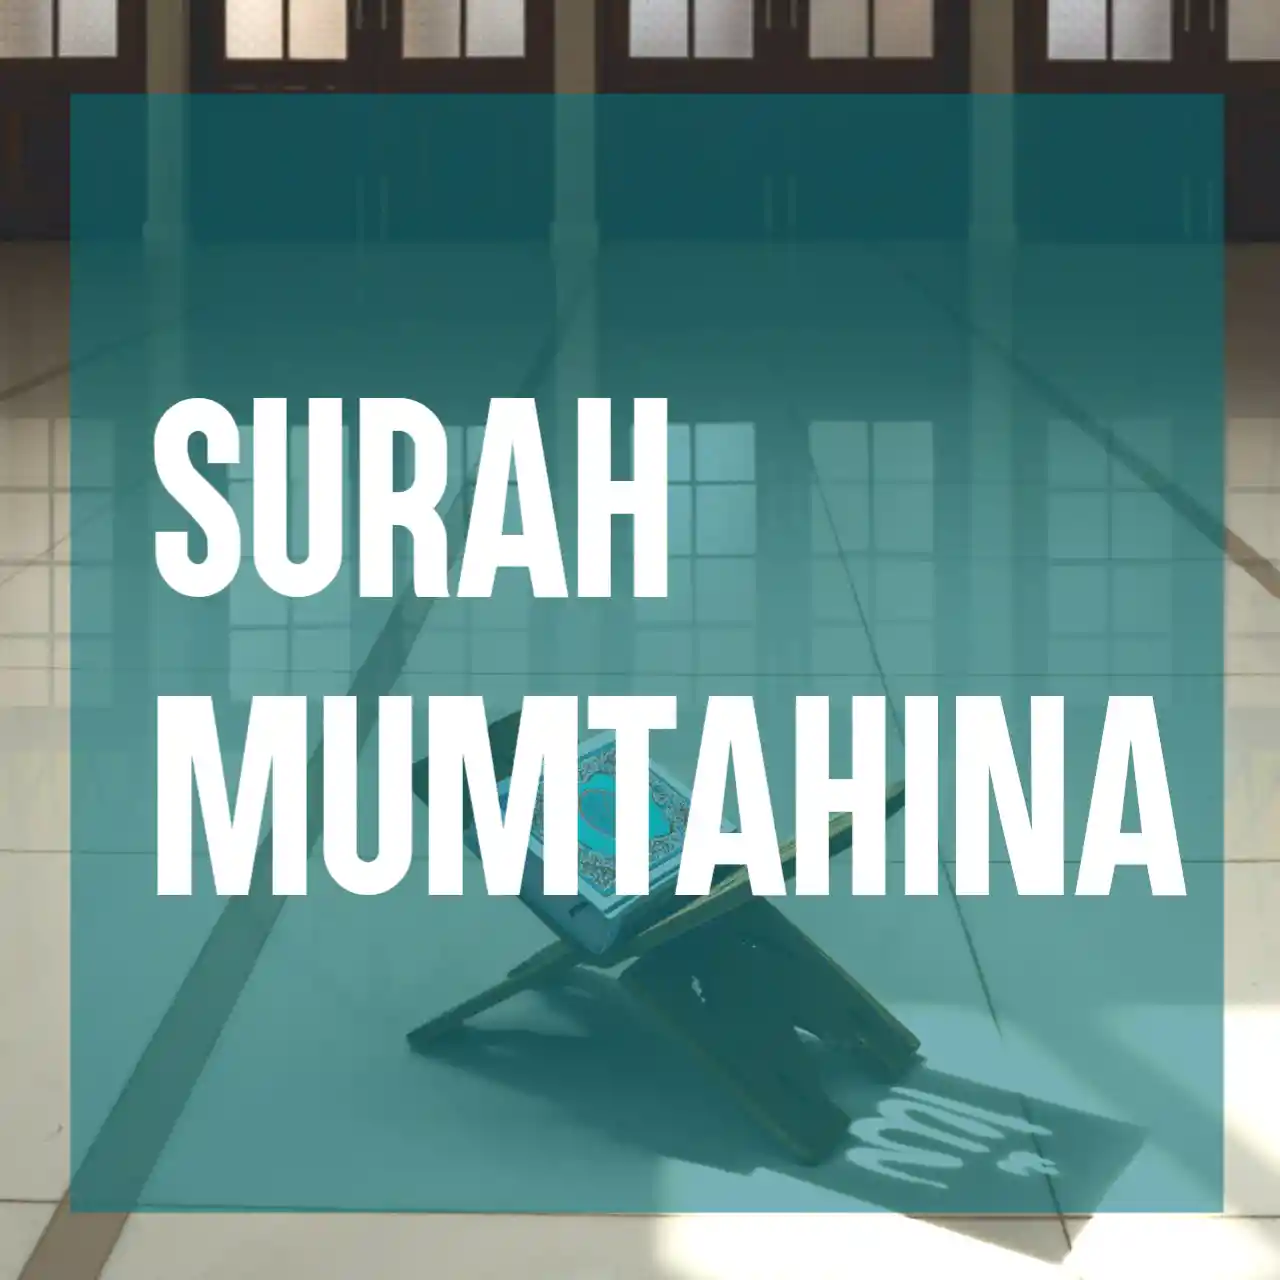 Surah Mumtahina